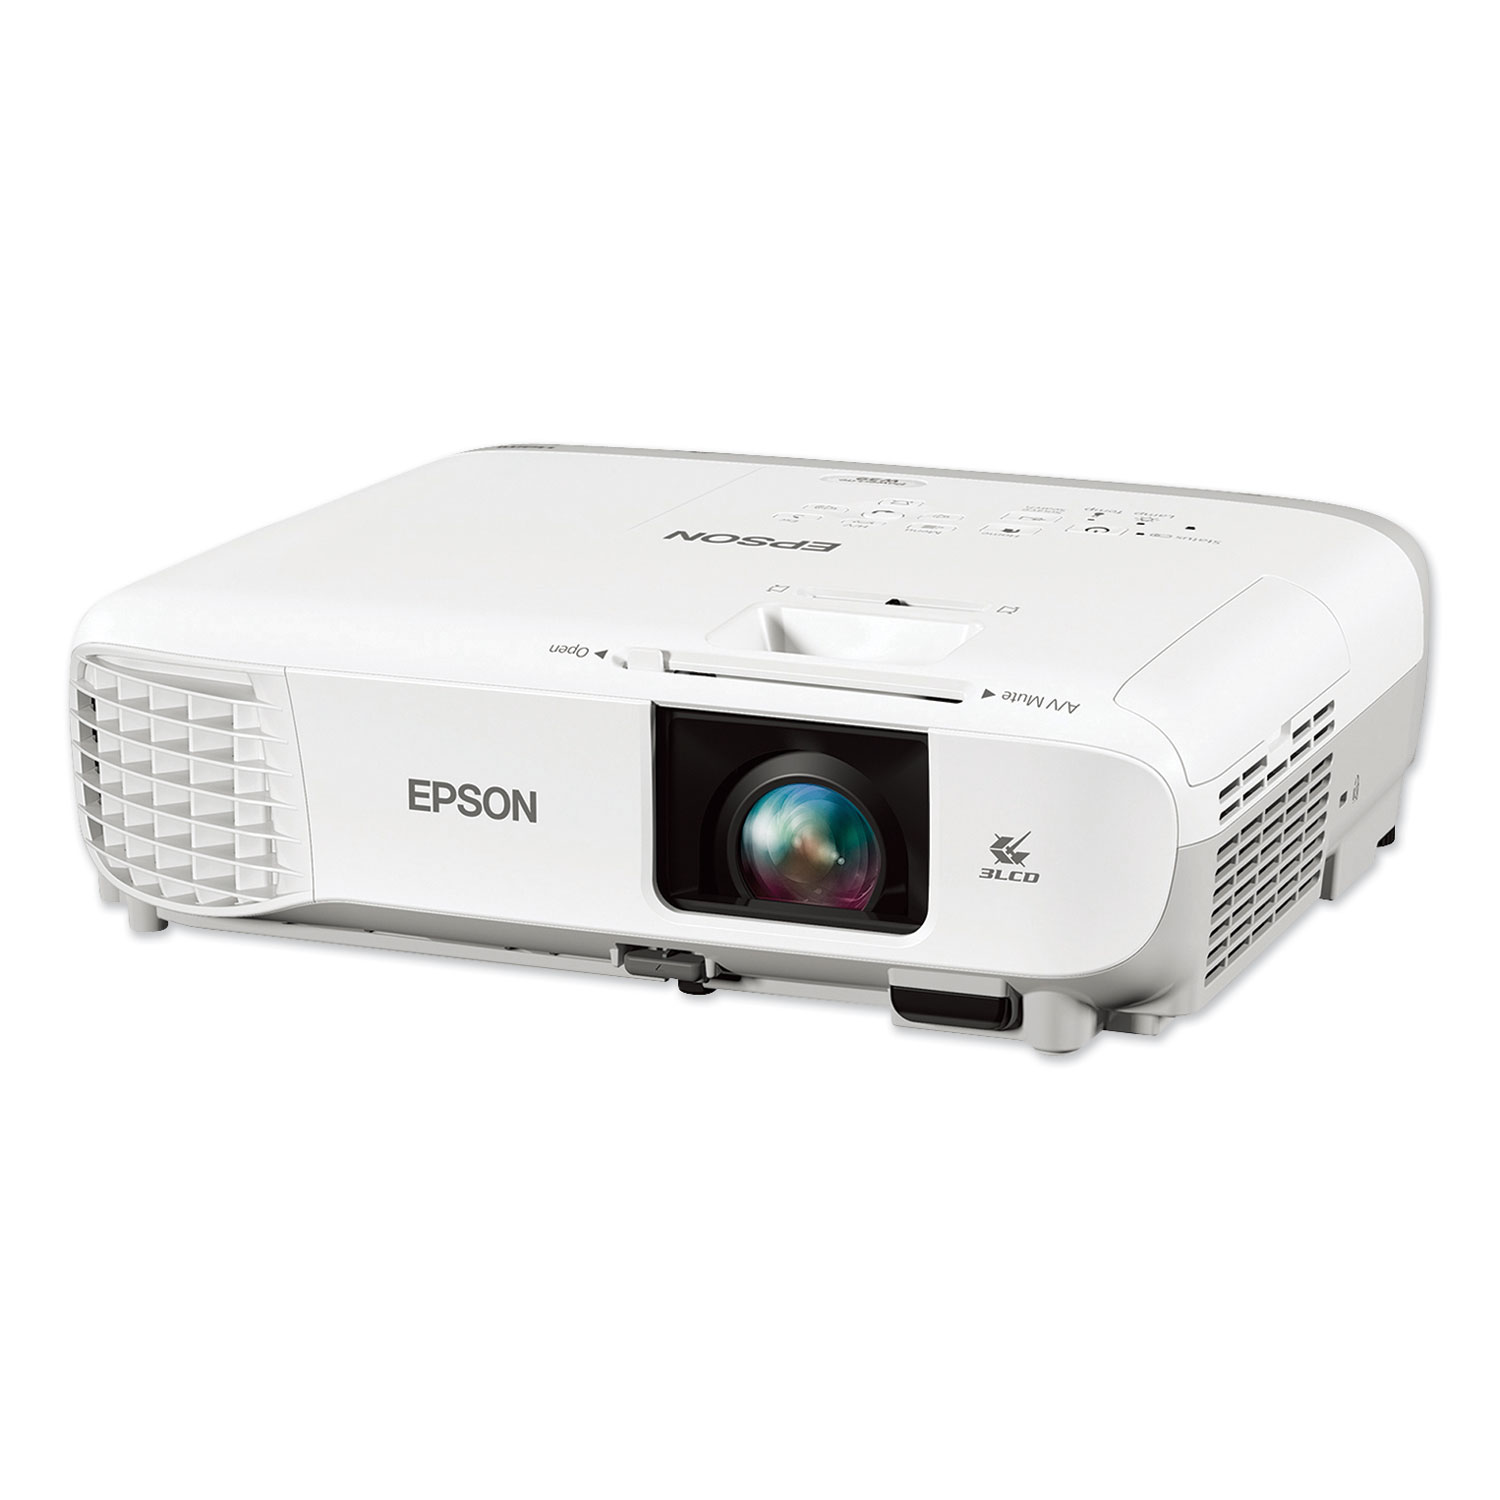  Epson V11H855020 PowerLite X39 XGA 3LCD Projector, 3,500 Lumens, 1024 x 768 Pixels, 1.2x Zoom (EPSV11H855020) 